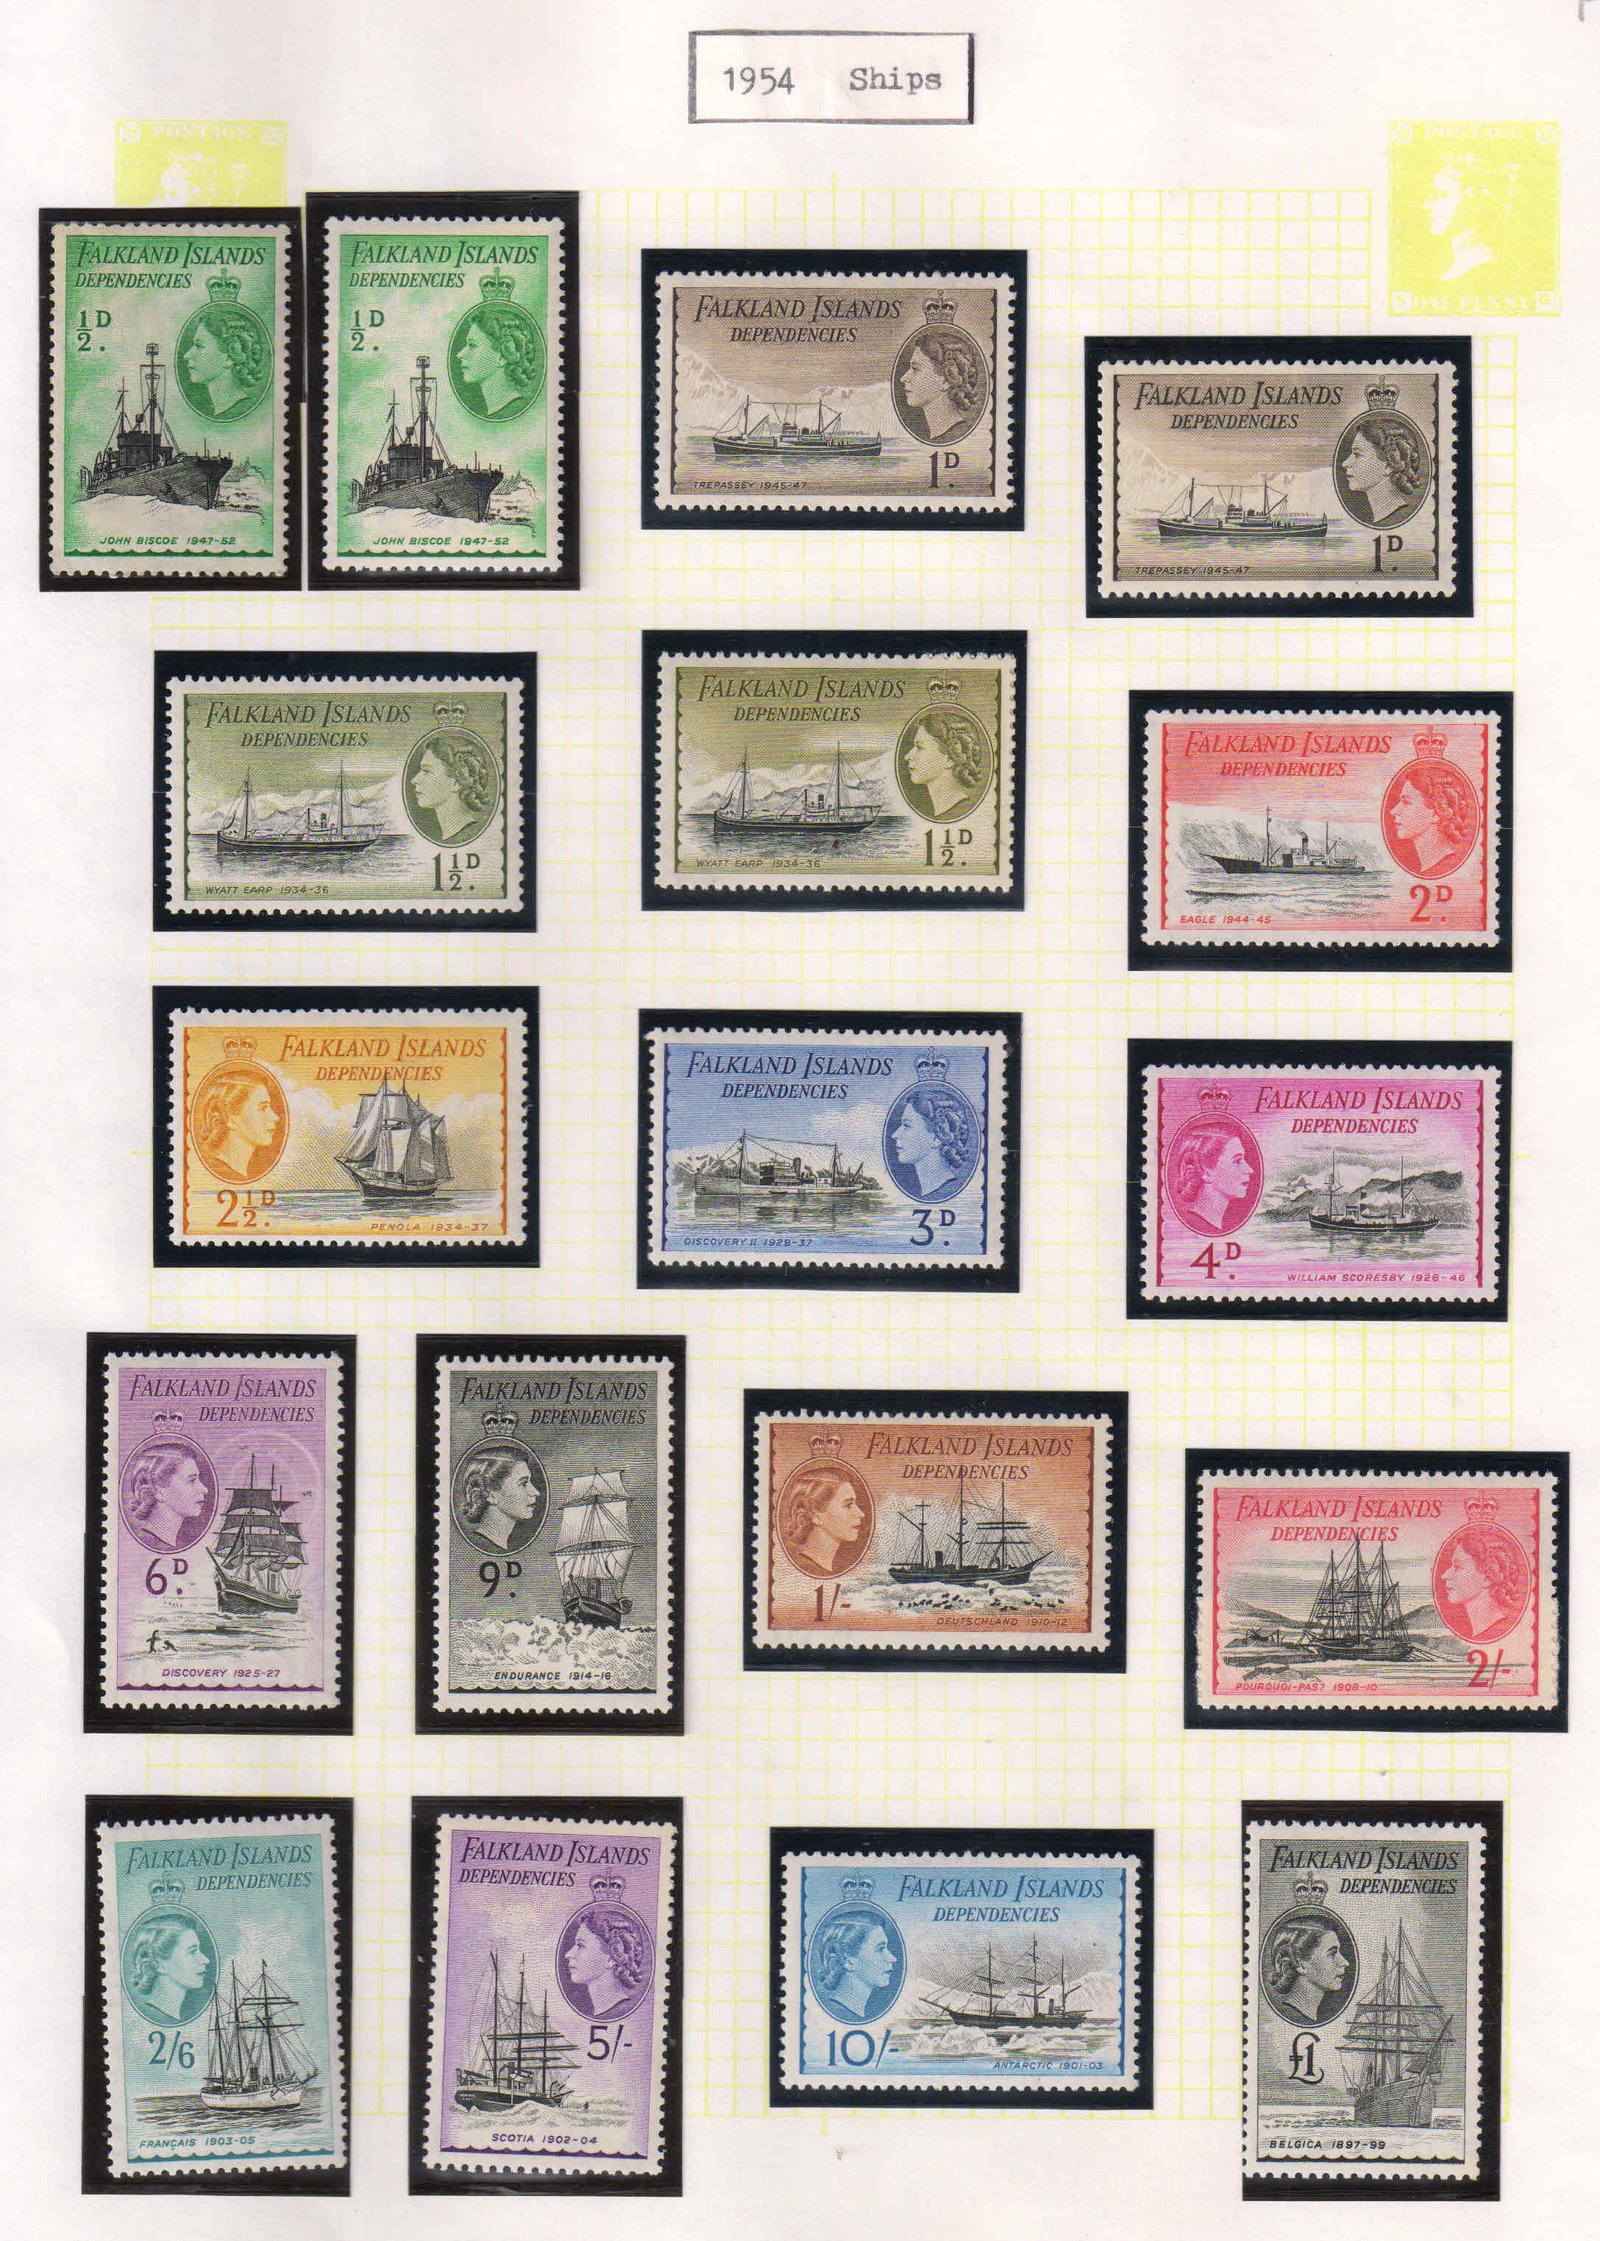 FALKLAND ISLANDS Dependencies 1954-Queen Elizabeth Pictorial Series, Ships, Set of 18 As per Scan, MNH, S.G. G 26-G 40-Cat £ 275-